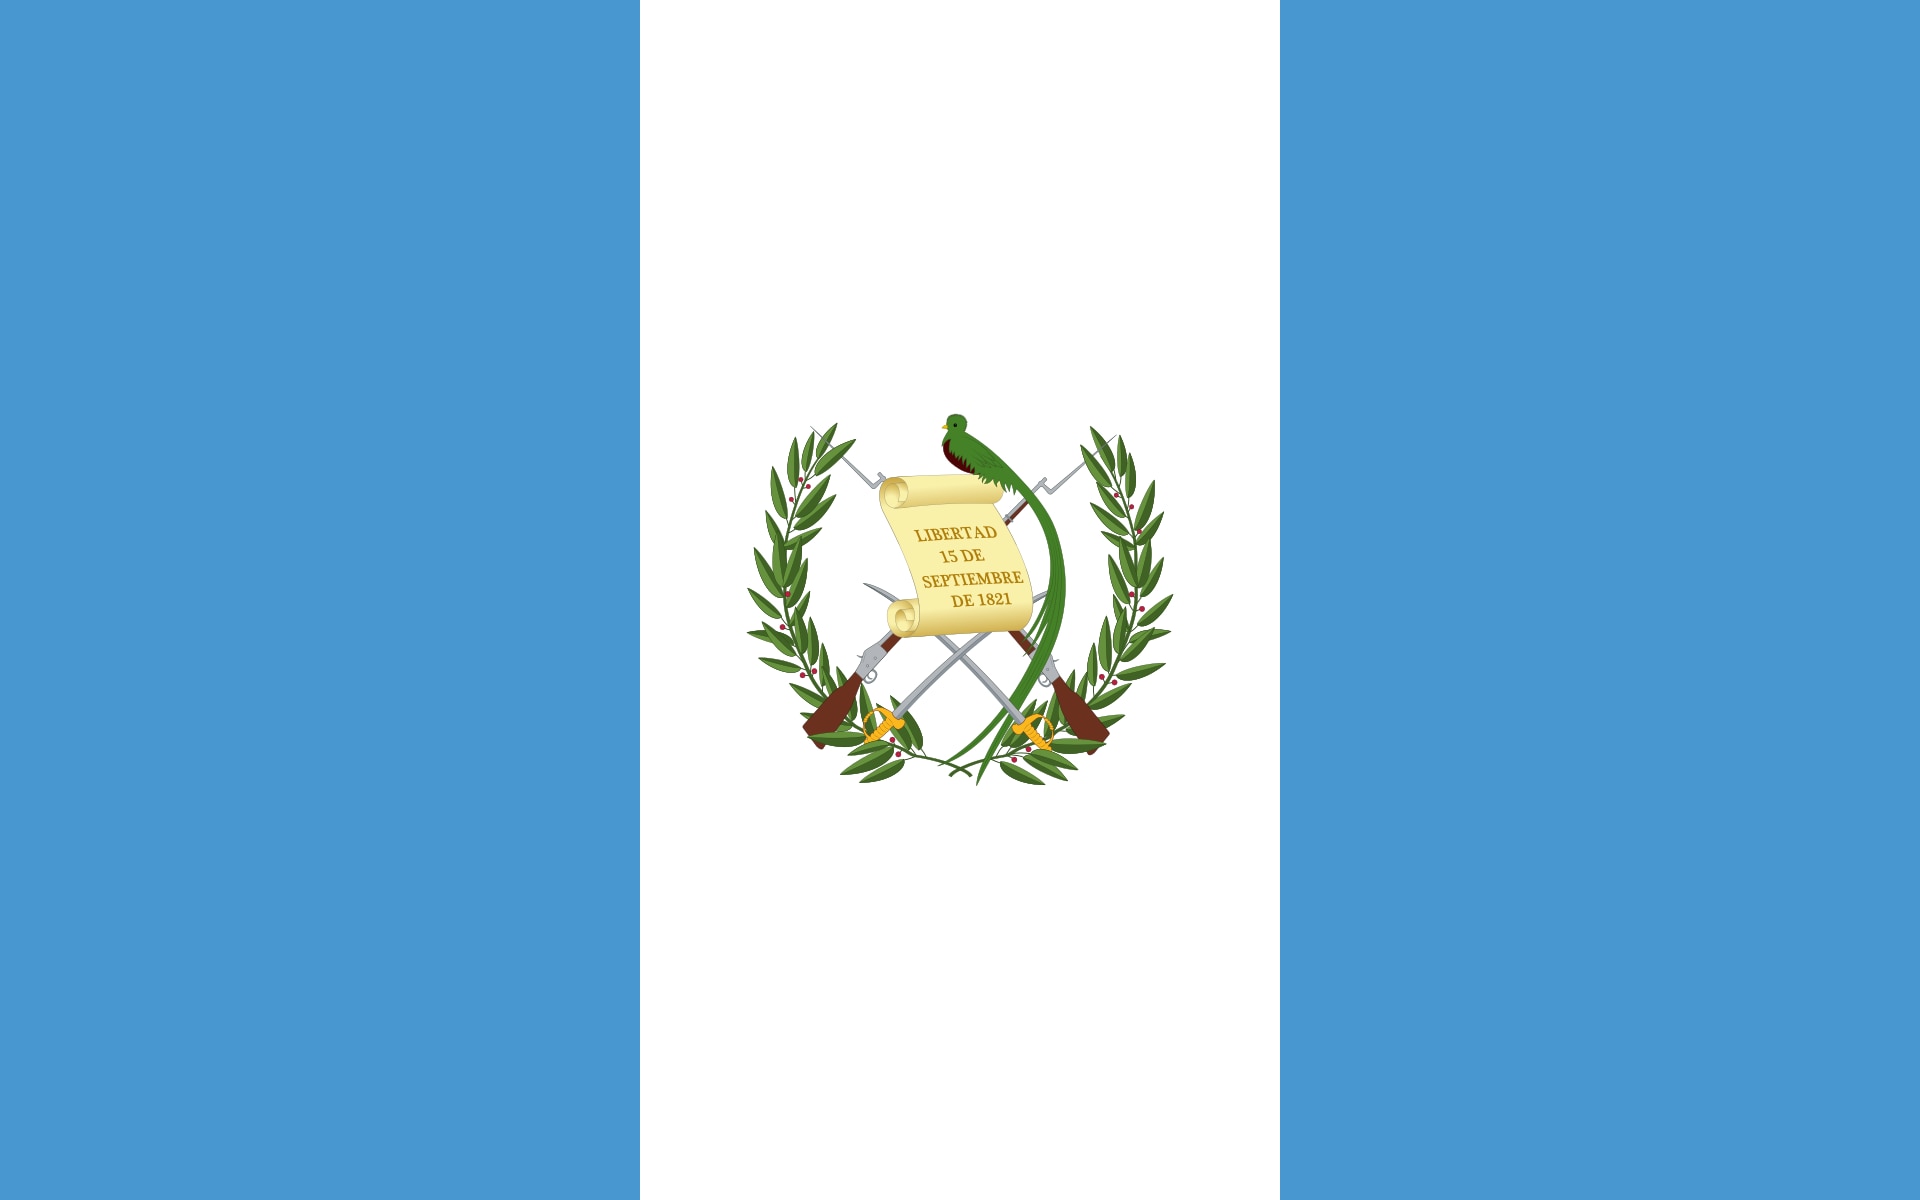 Image of the Guatemalan flag